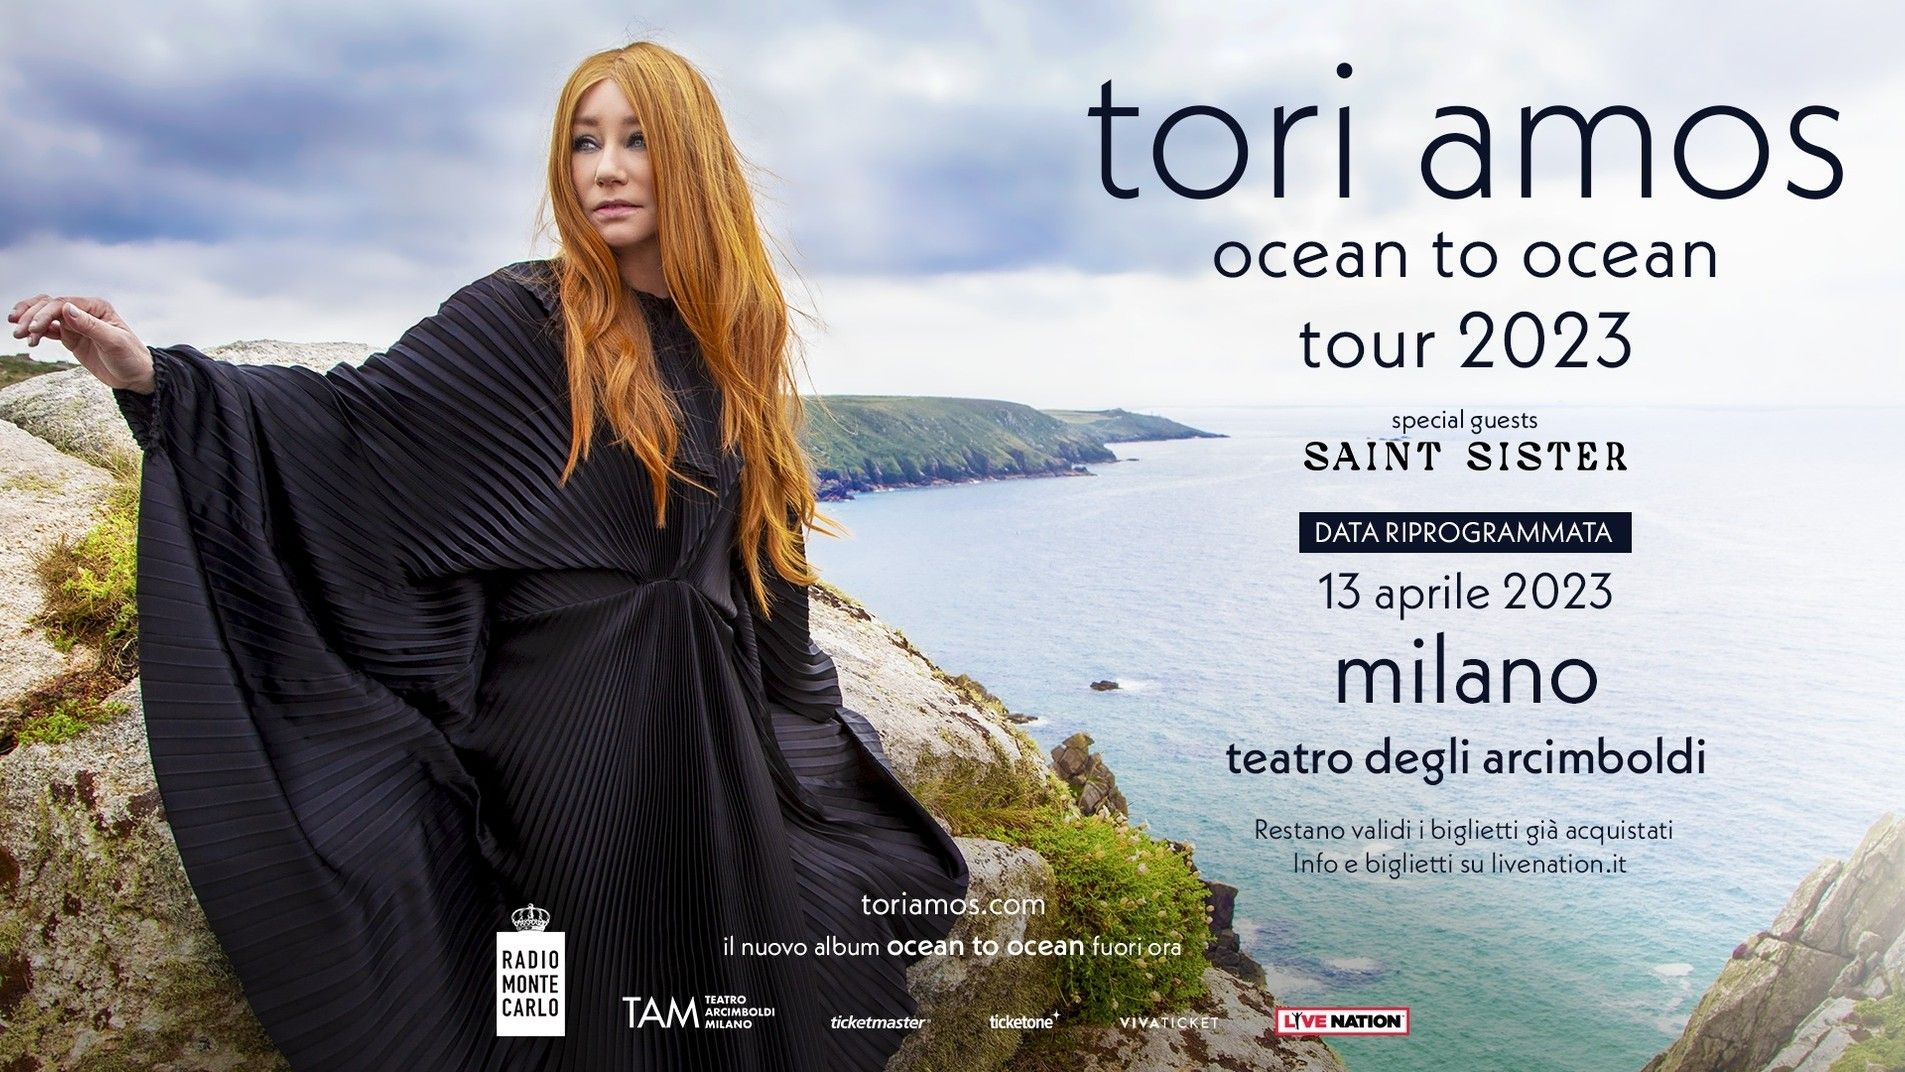 Tori Amos "Ocean to Ocean tour 2023"